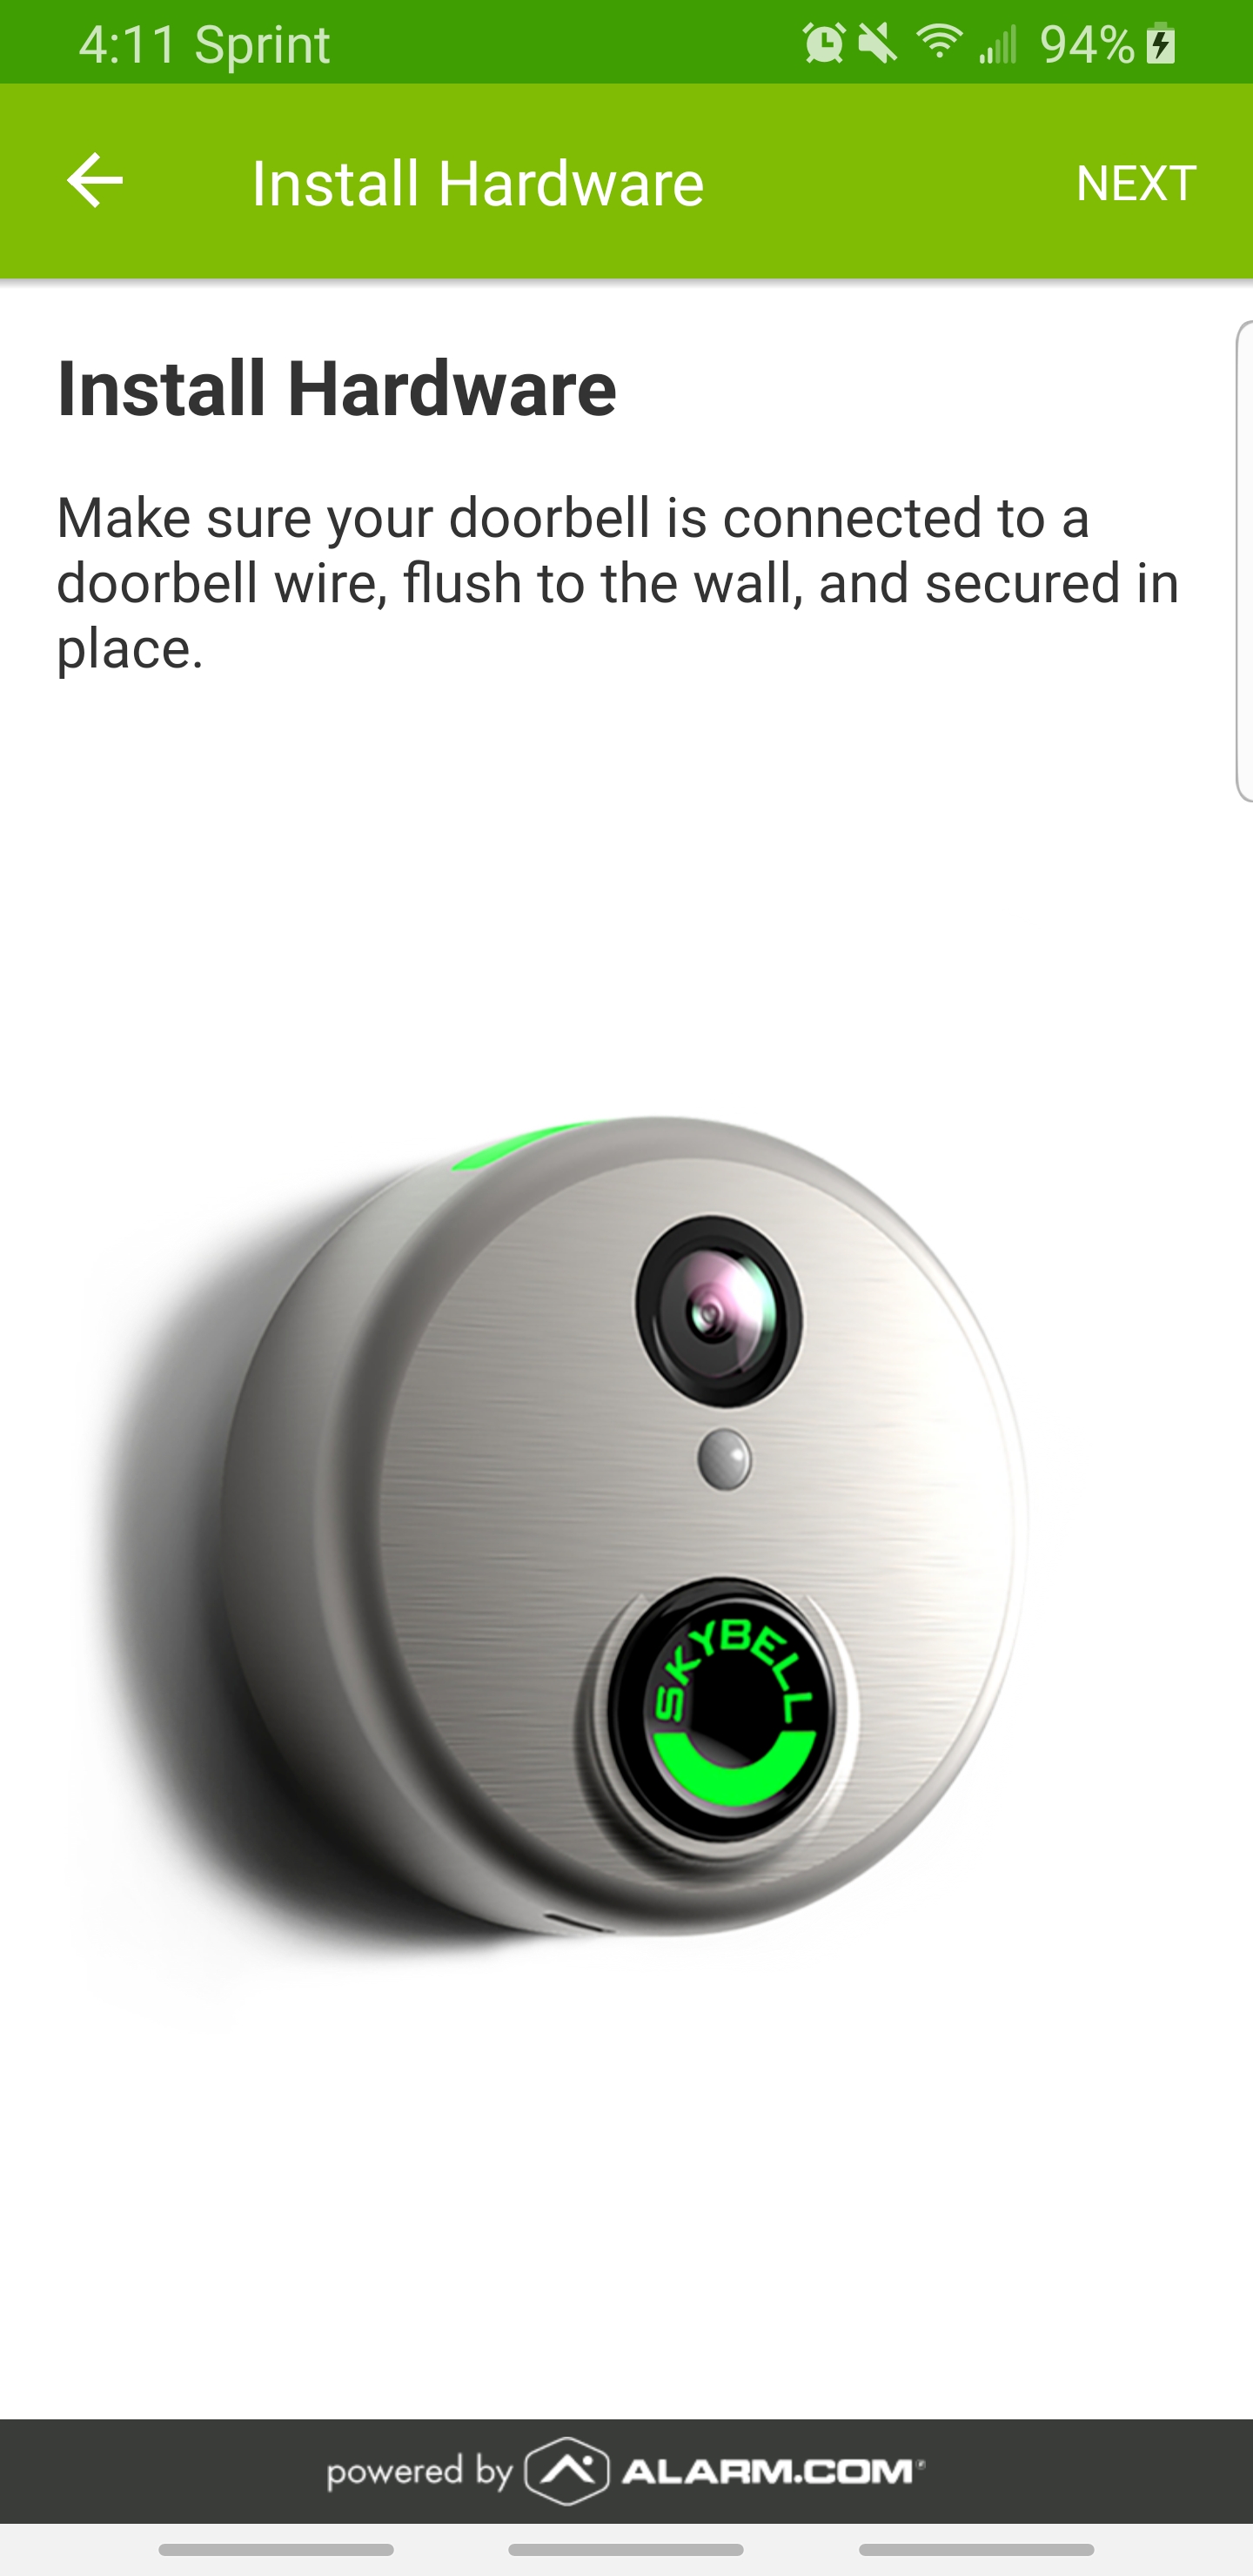 Alarm.com Skybell HD Wi-Fi Doorbell Camera -1080P - buy one today